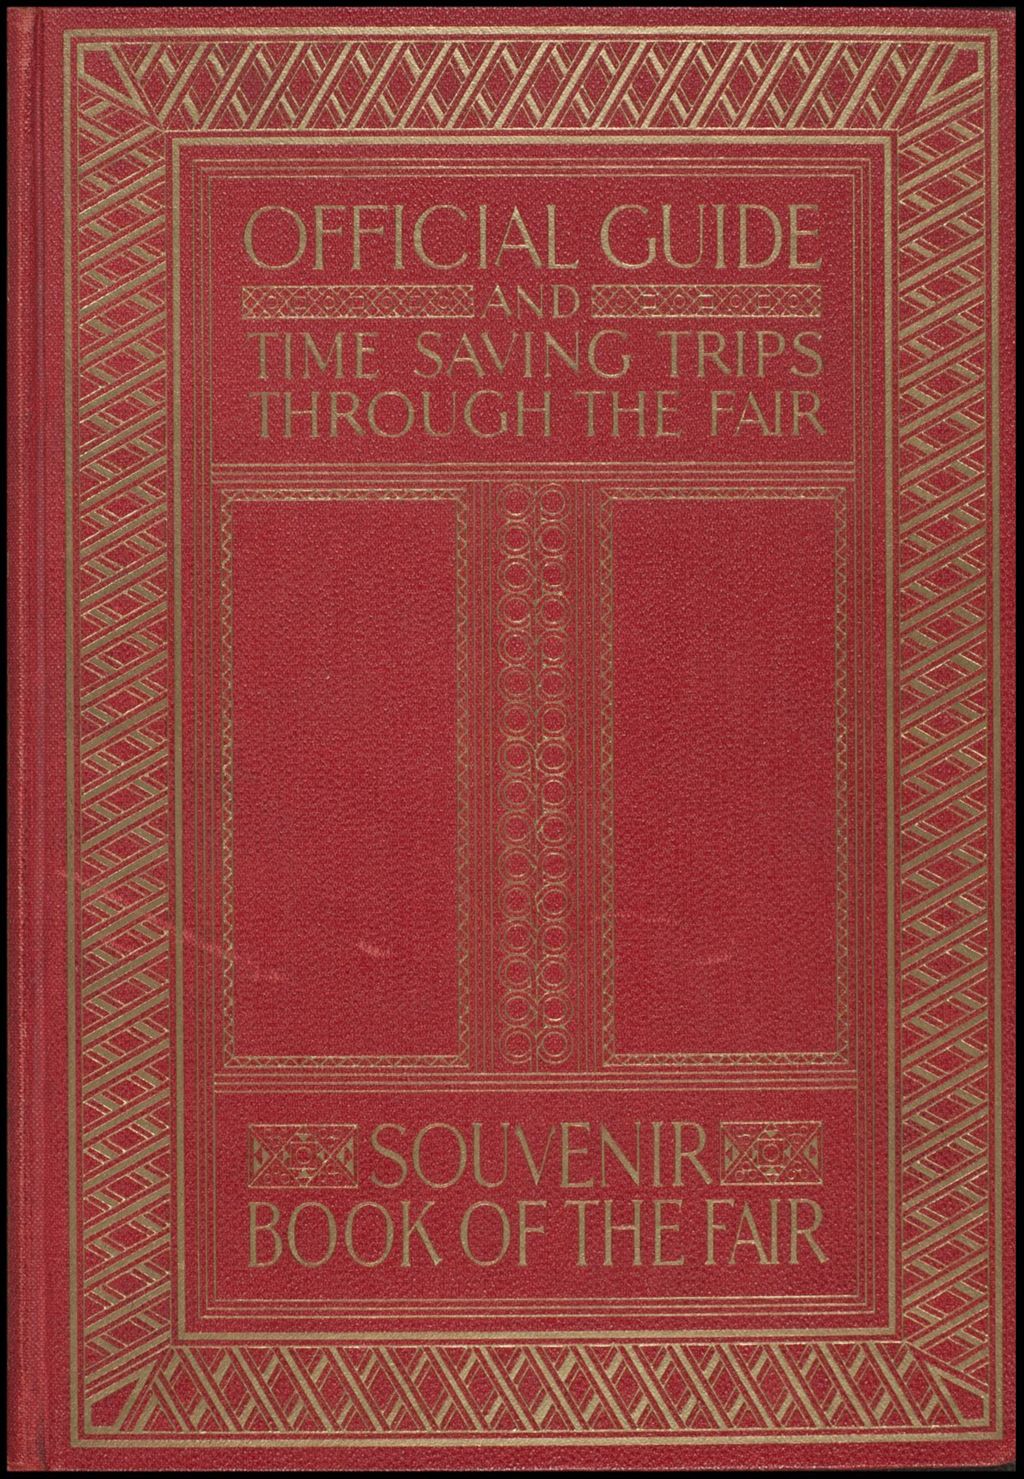 Miniature of Official guide and time saving trips through the fair: souvenir book of the fair (Folder 16-177)